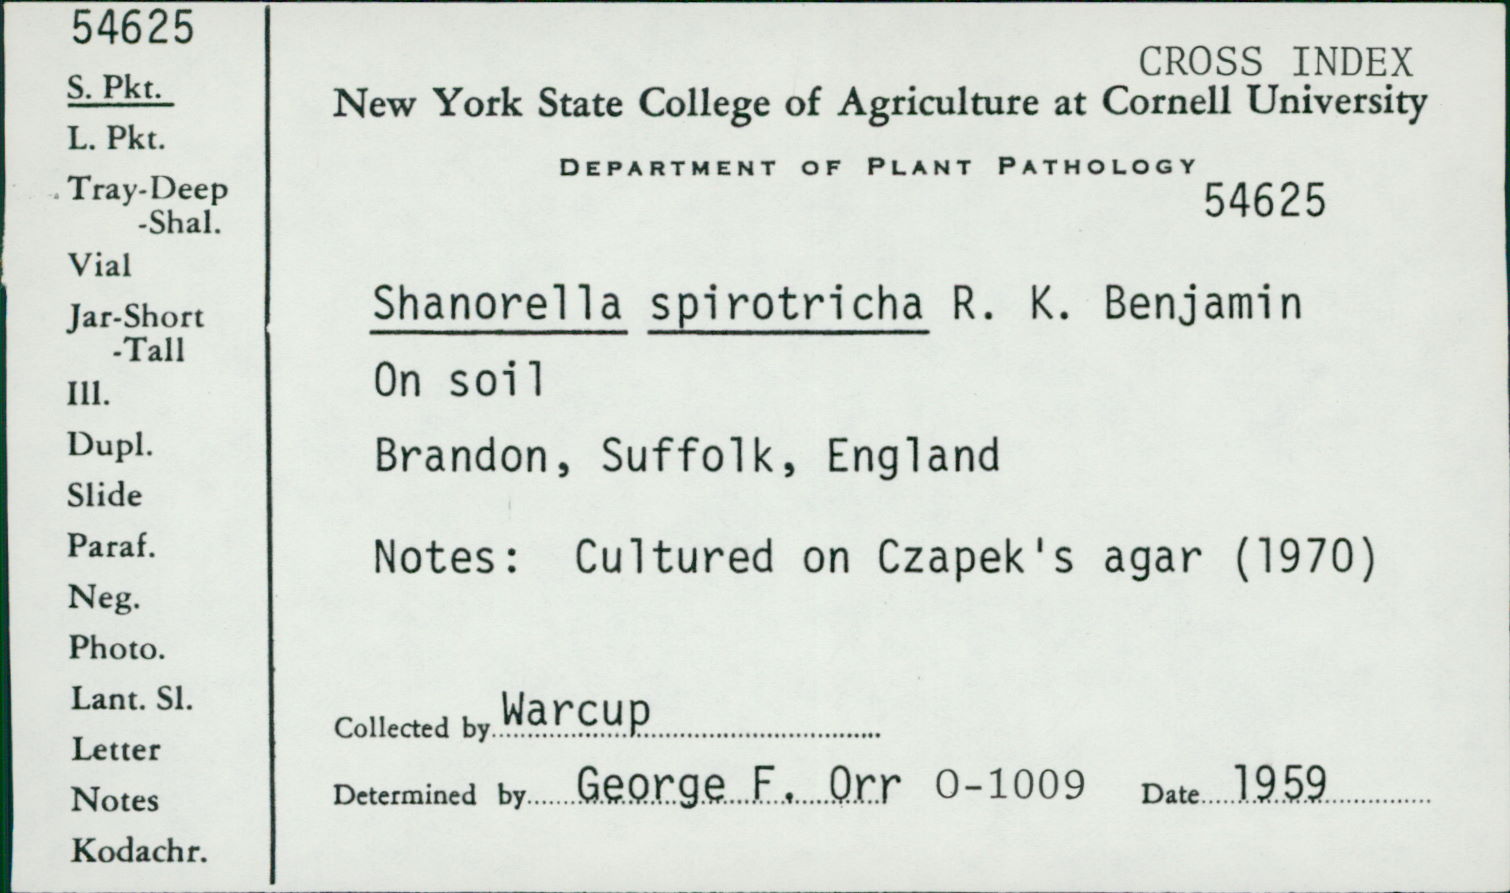 Shanorella spirotricha image